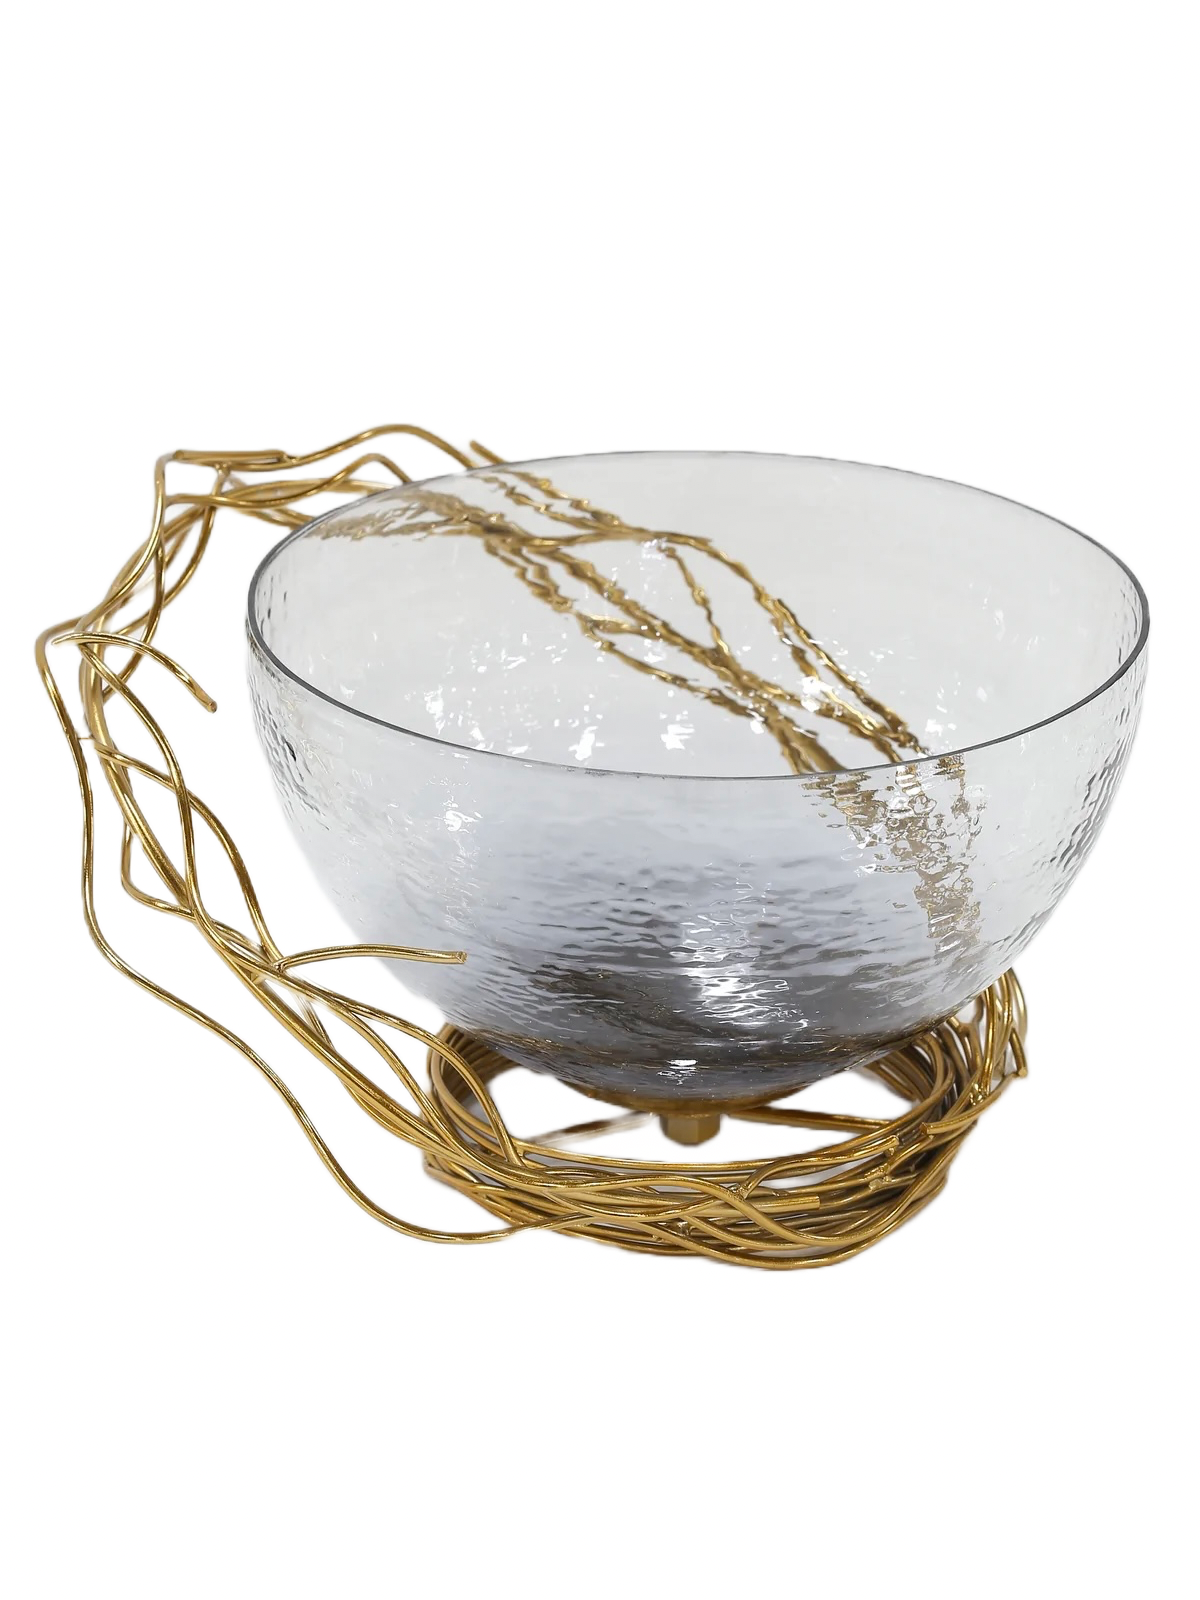 Smoked Glass Bowl with Gold Tone Twig Design, 12L x 10W x 9H.